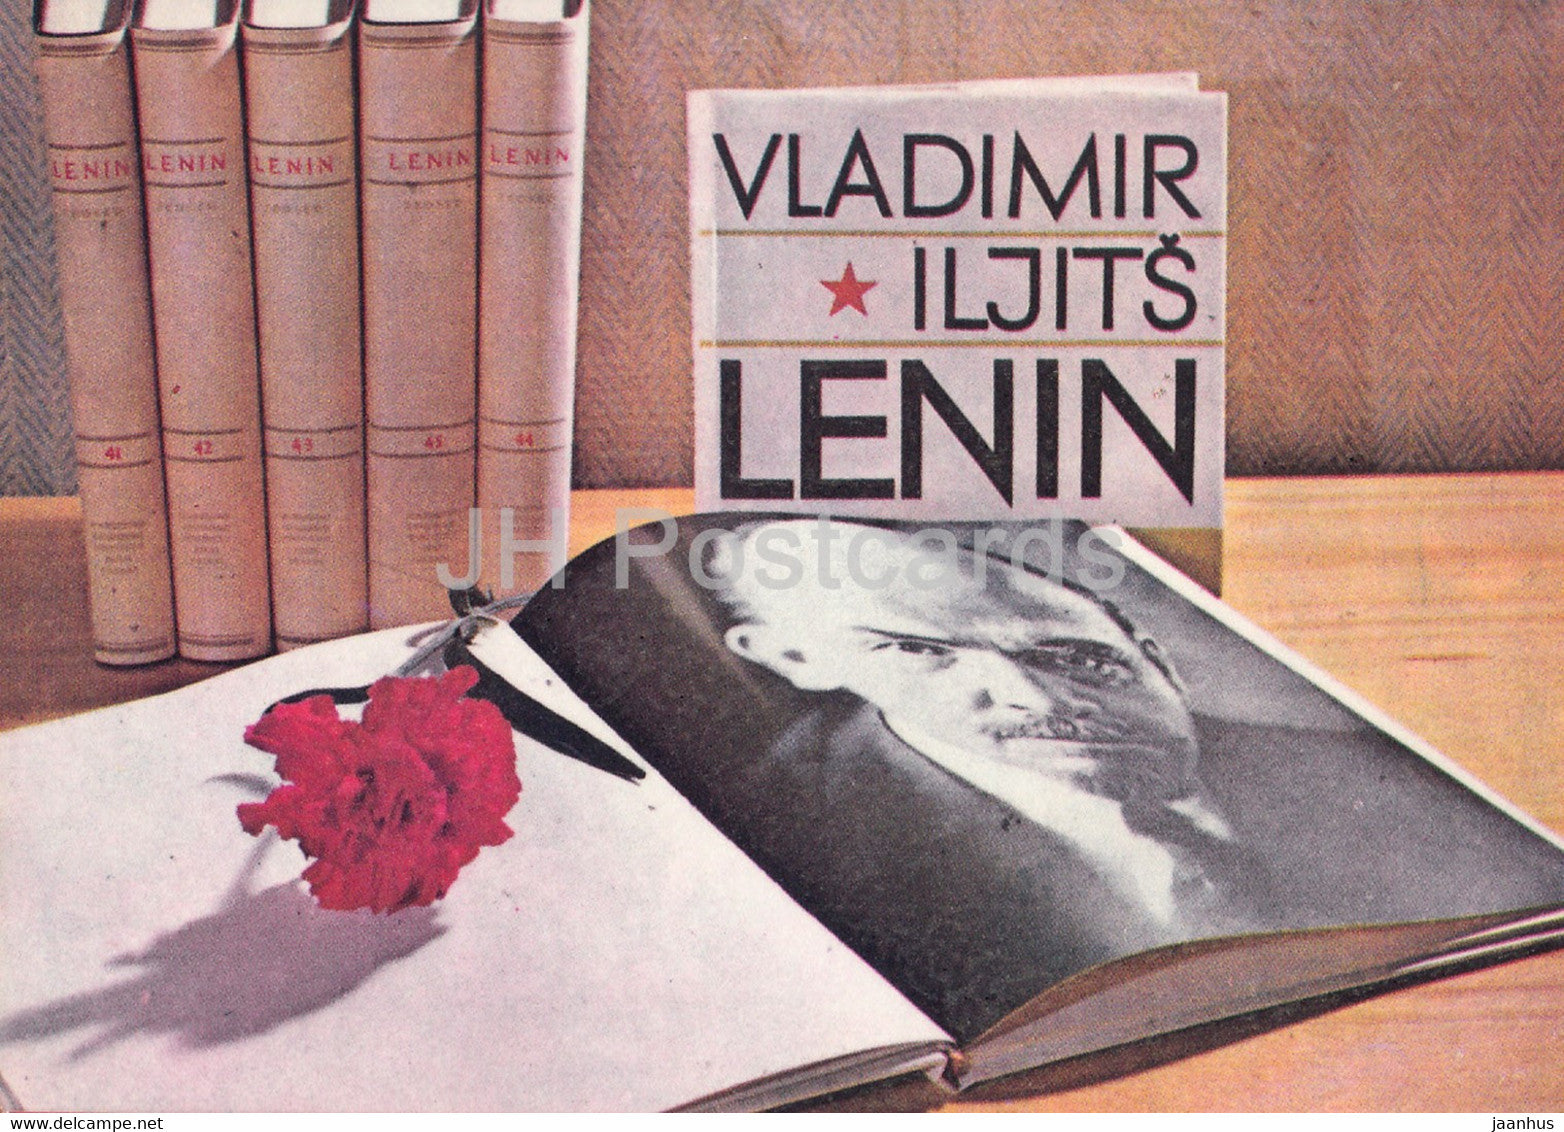 Lenin's Works - Estonian Printed Book - 1975 - Estonia USSR - unused - JH Postcards